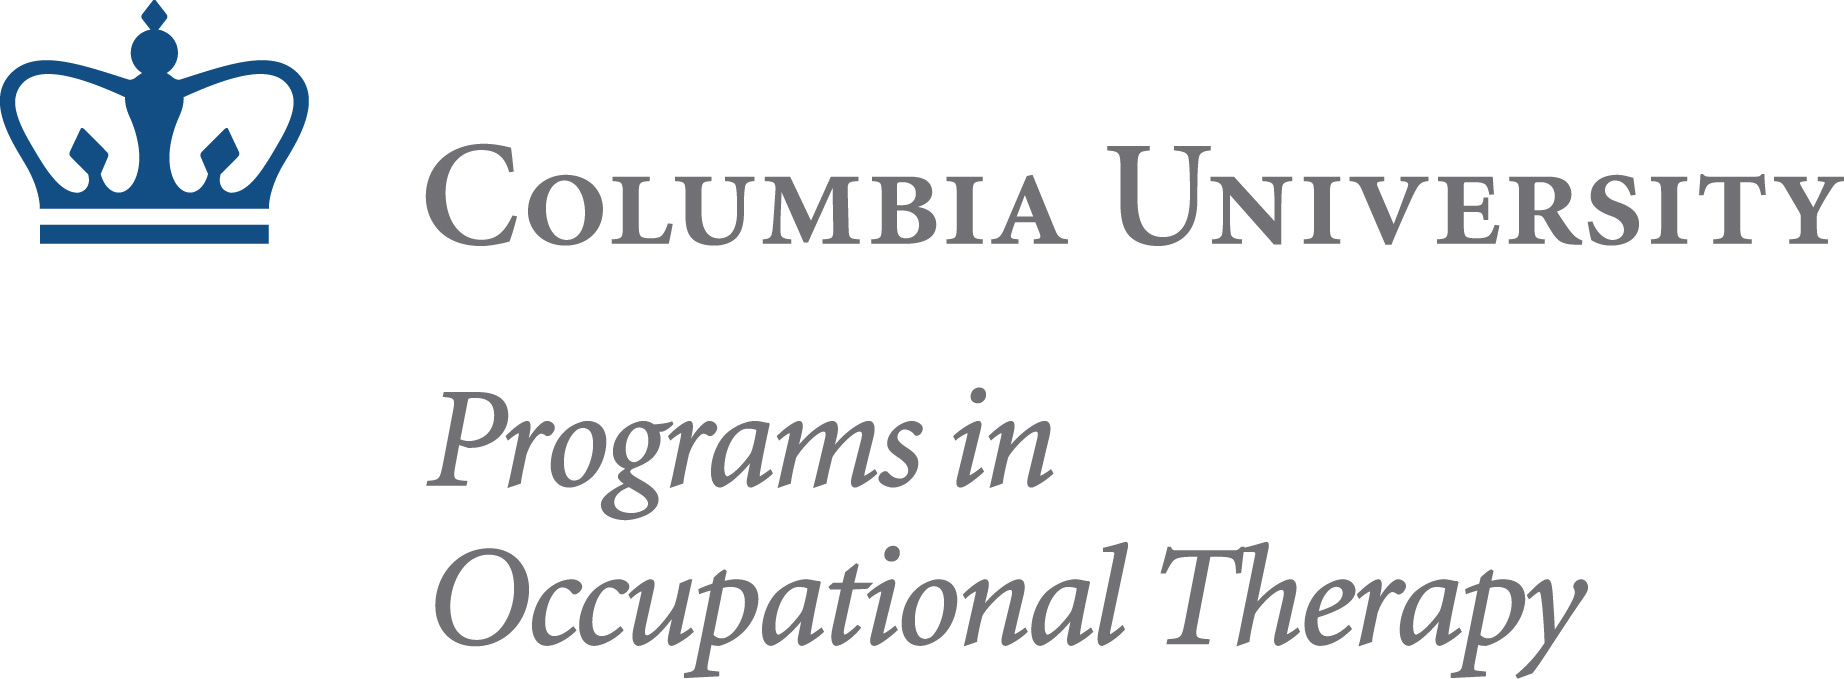 Columbia University OT logo.jpg